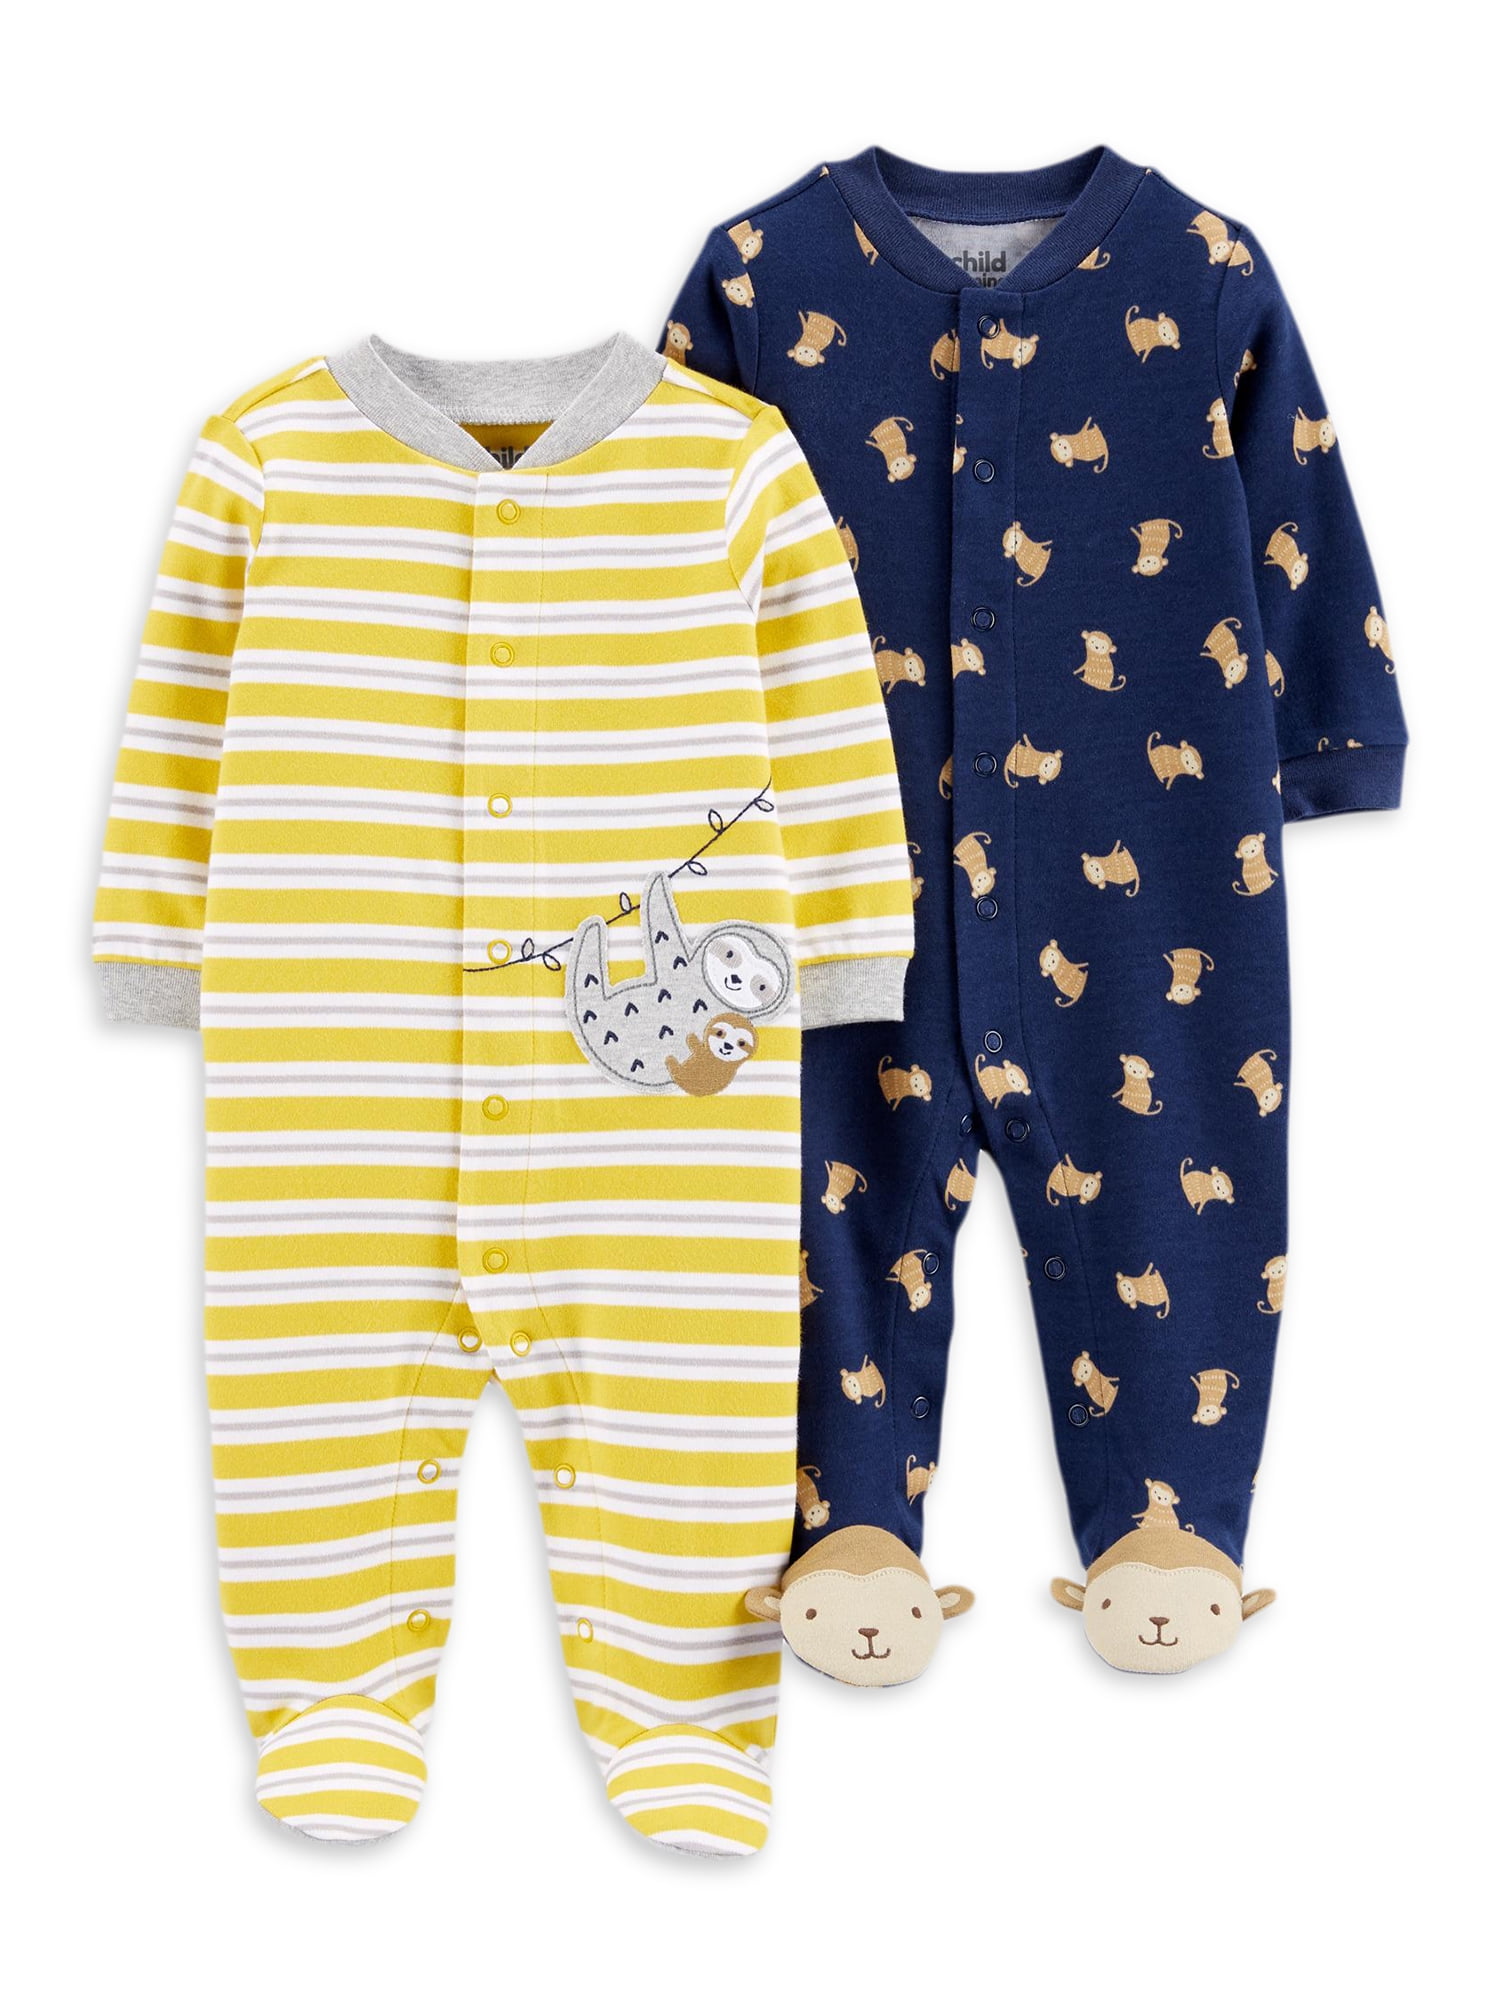 Newborn Baby Boy Girl Long Sleeve Floral Infant Sleepwear Pajamas Set 0-3 M, Yellow